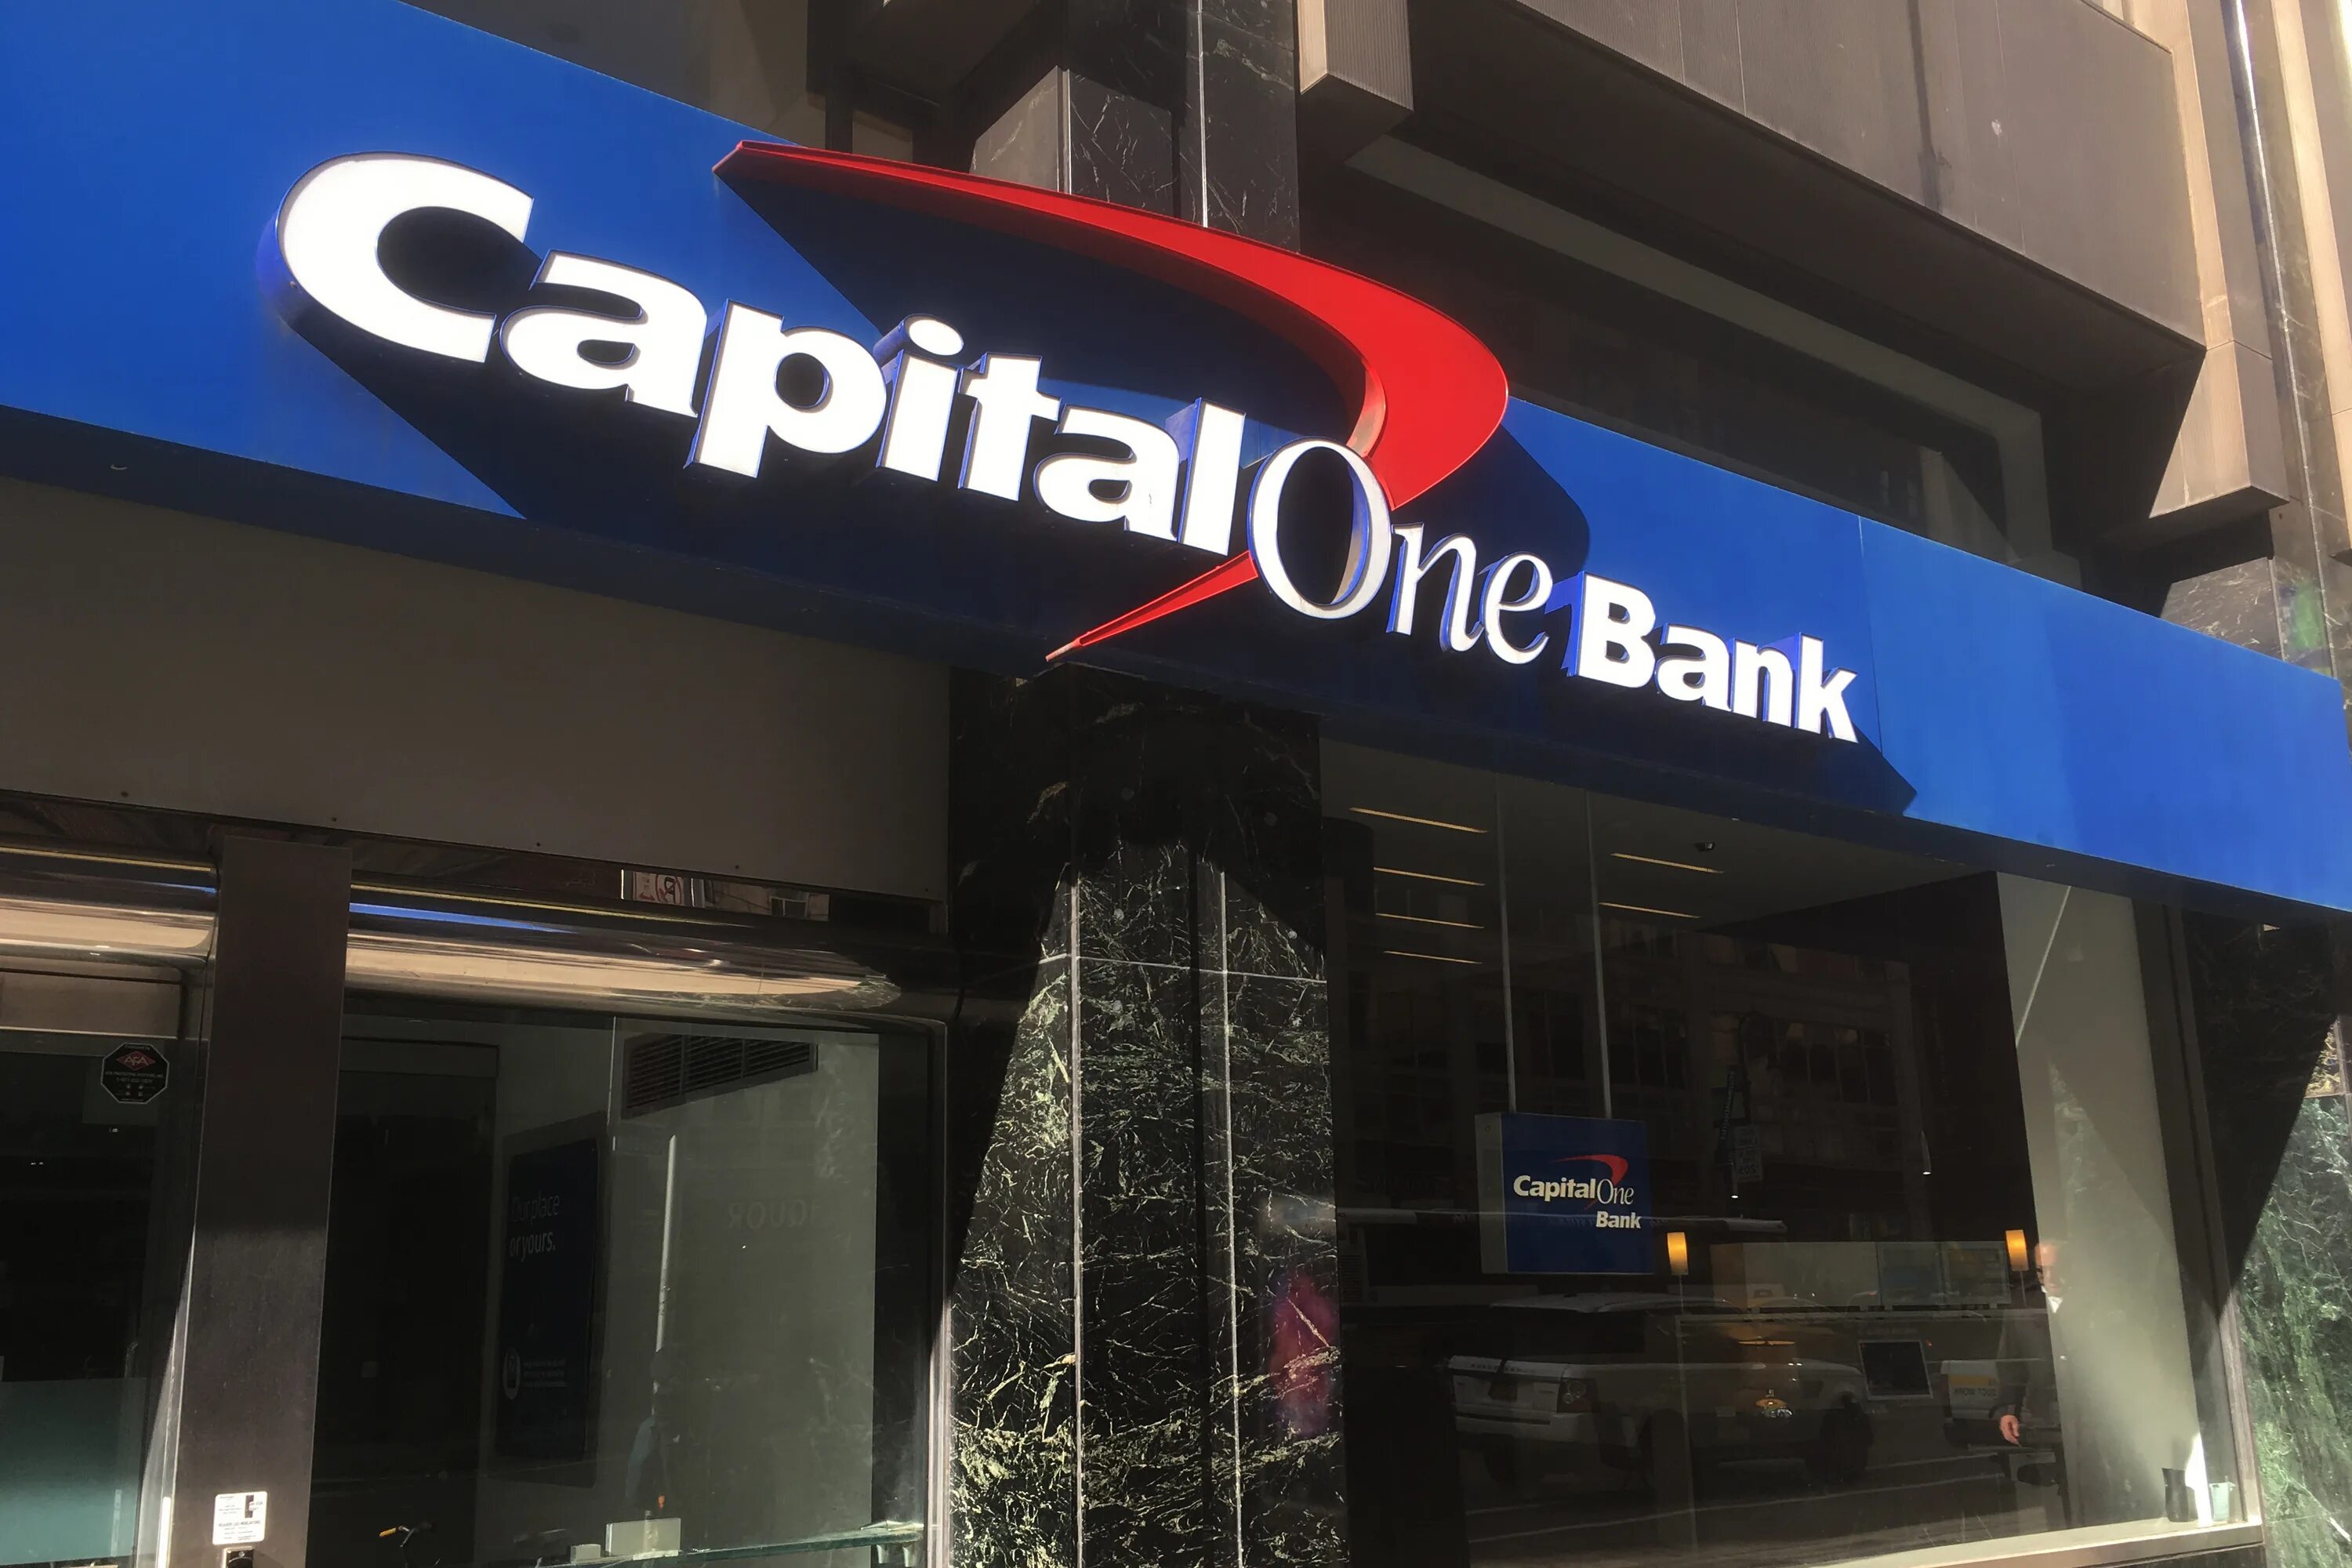 Capital one. ONEBANK. Capital one logo. Capital Bank logo.